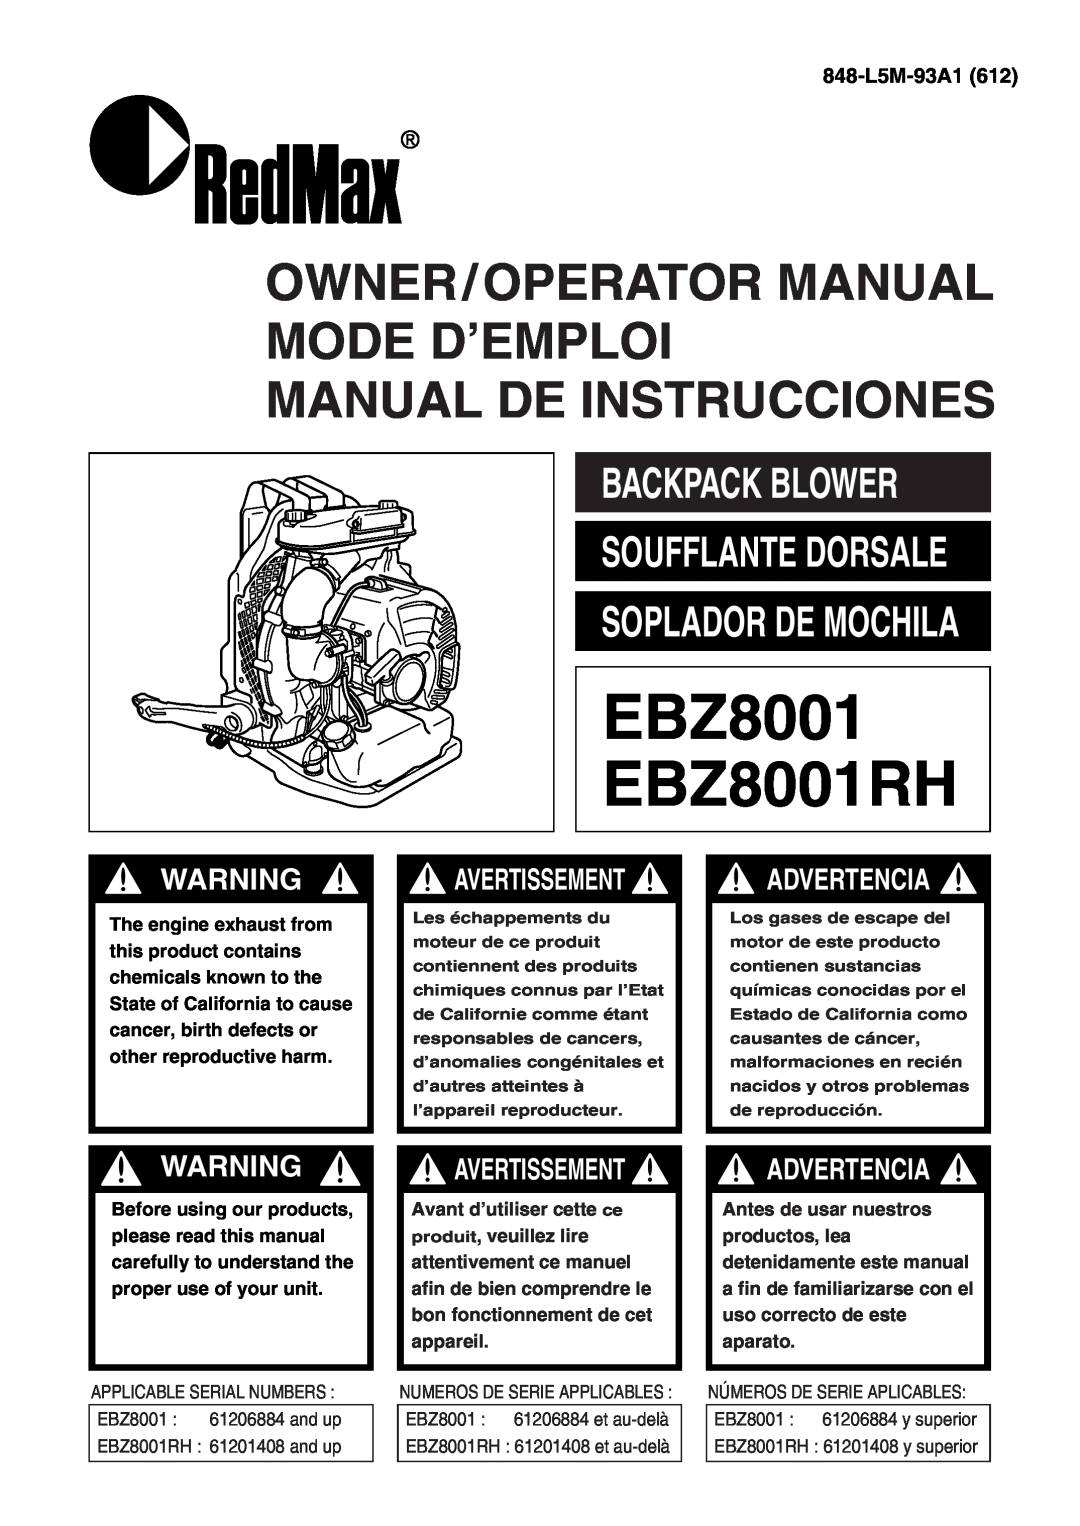 RedMax manual Backpack Blower, 848-L5M-93A1, EBZ8001 EBZ8001RH, Soufflante Dorsale Soplador De Mochila, Advertencia 